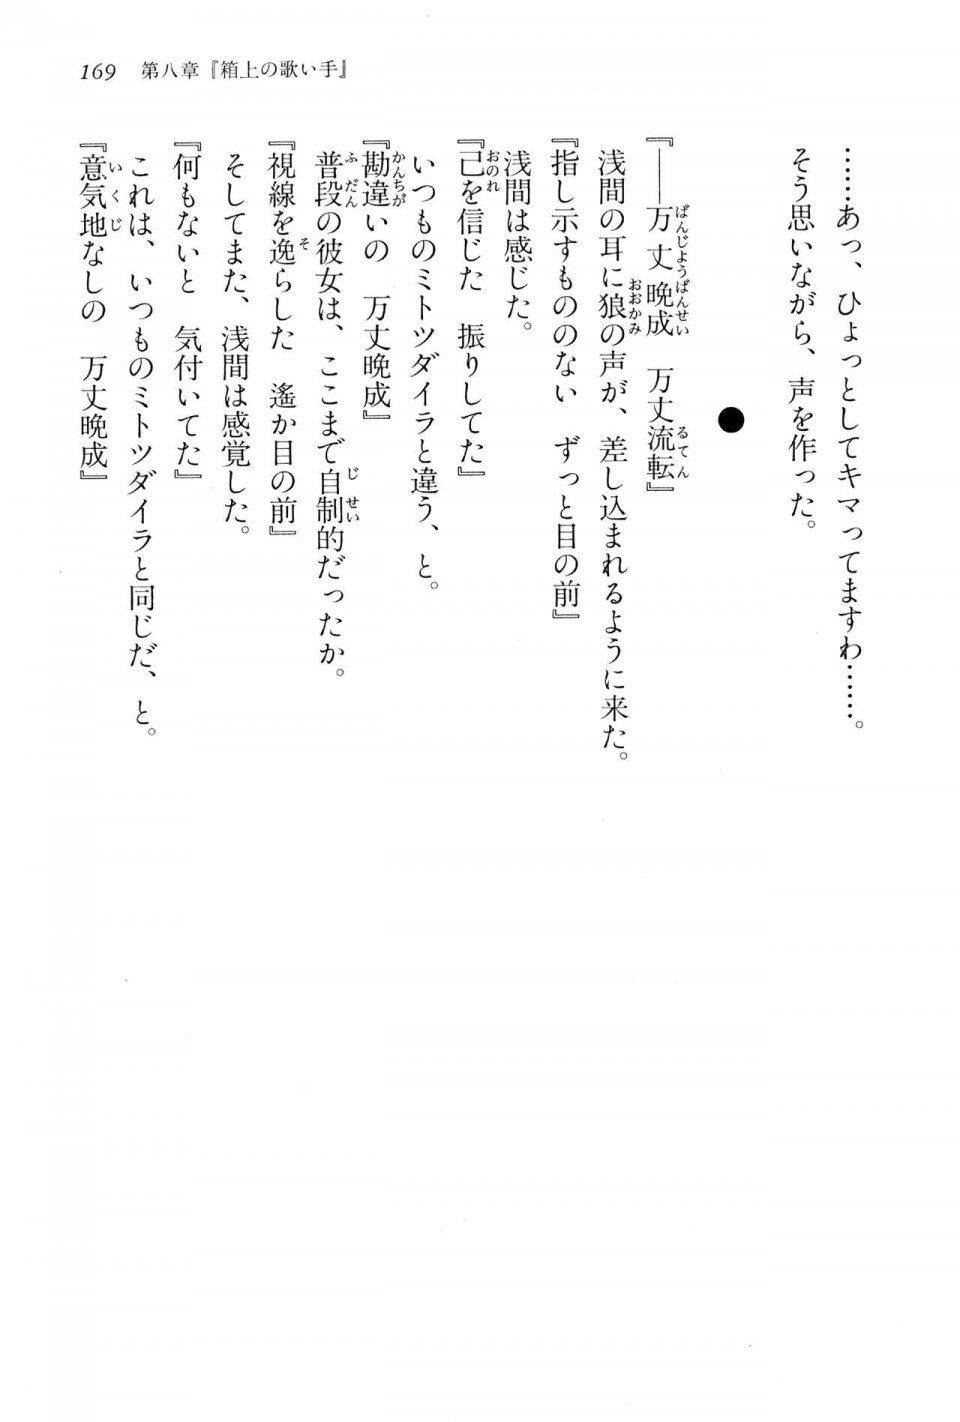 Kyoukai Senjou no Horizon BD Special Mininovel Vol 2(1B) - Photo #173